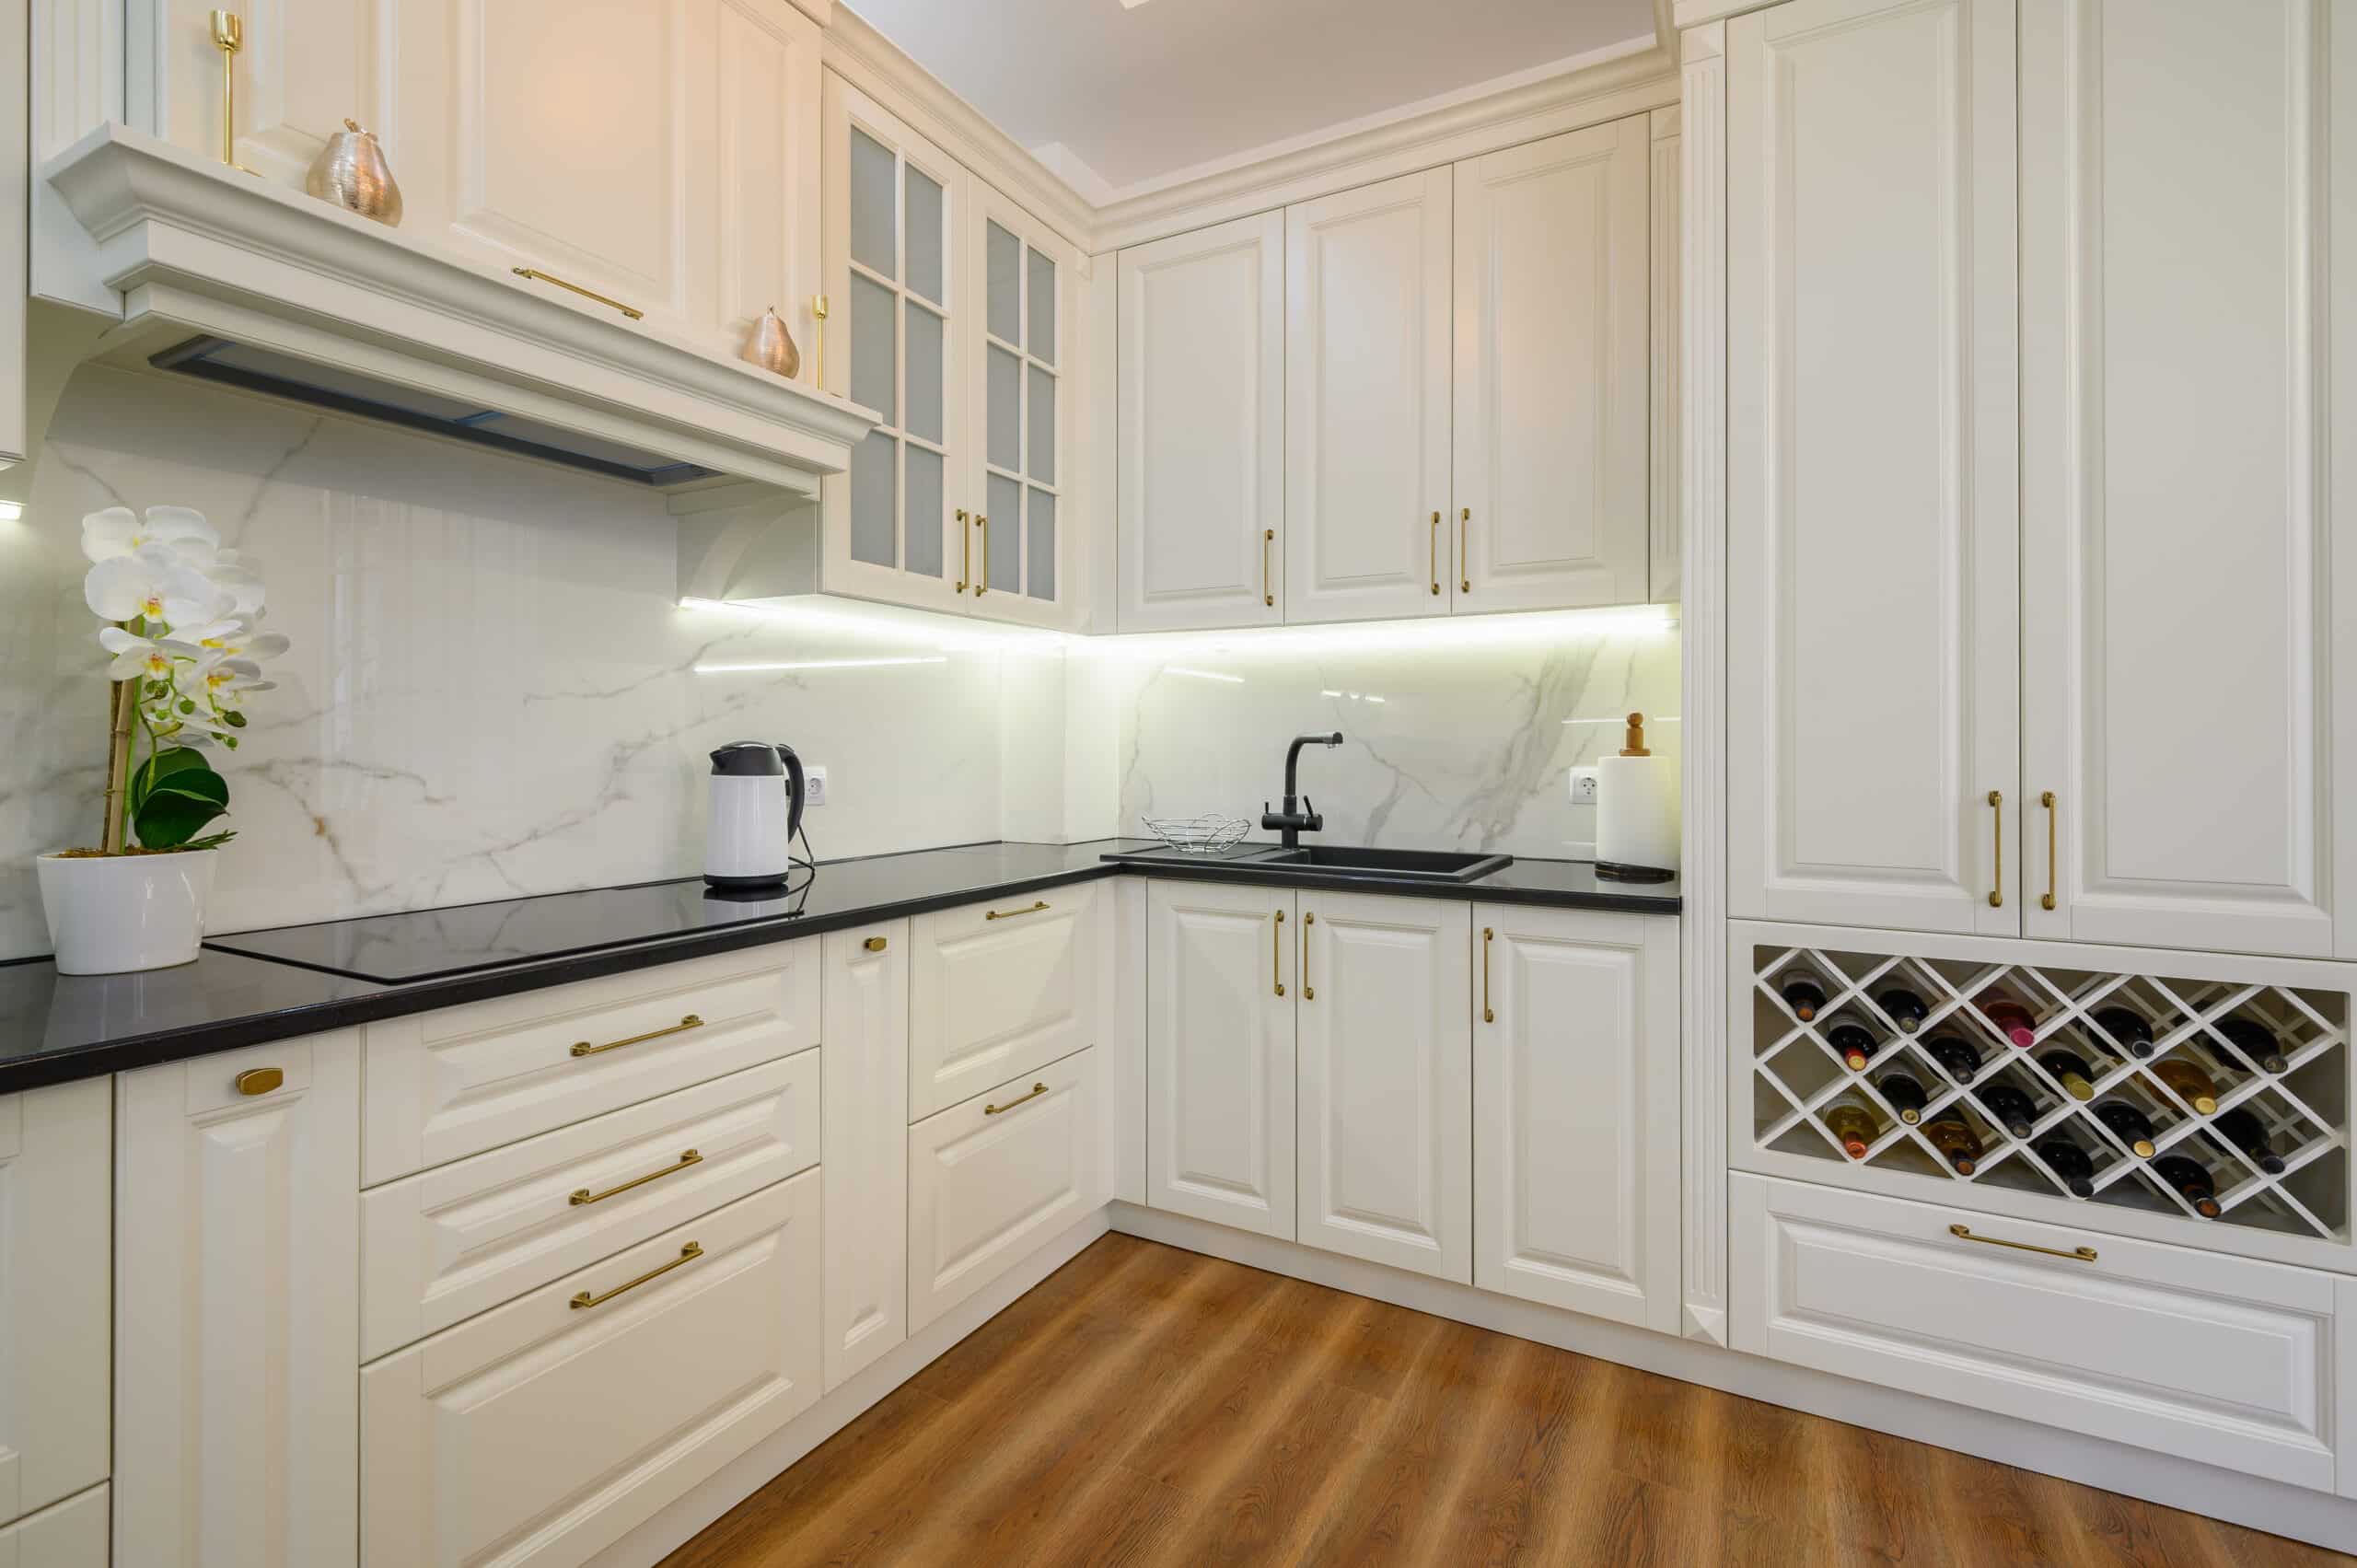 White luxury modern classic kitchen furniture with wine rack, corner view